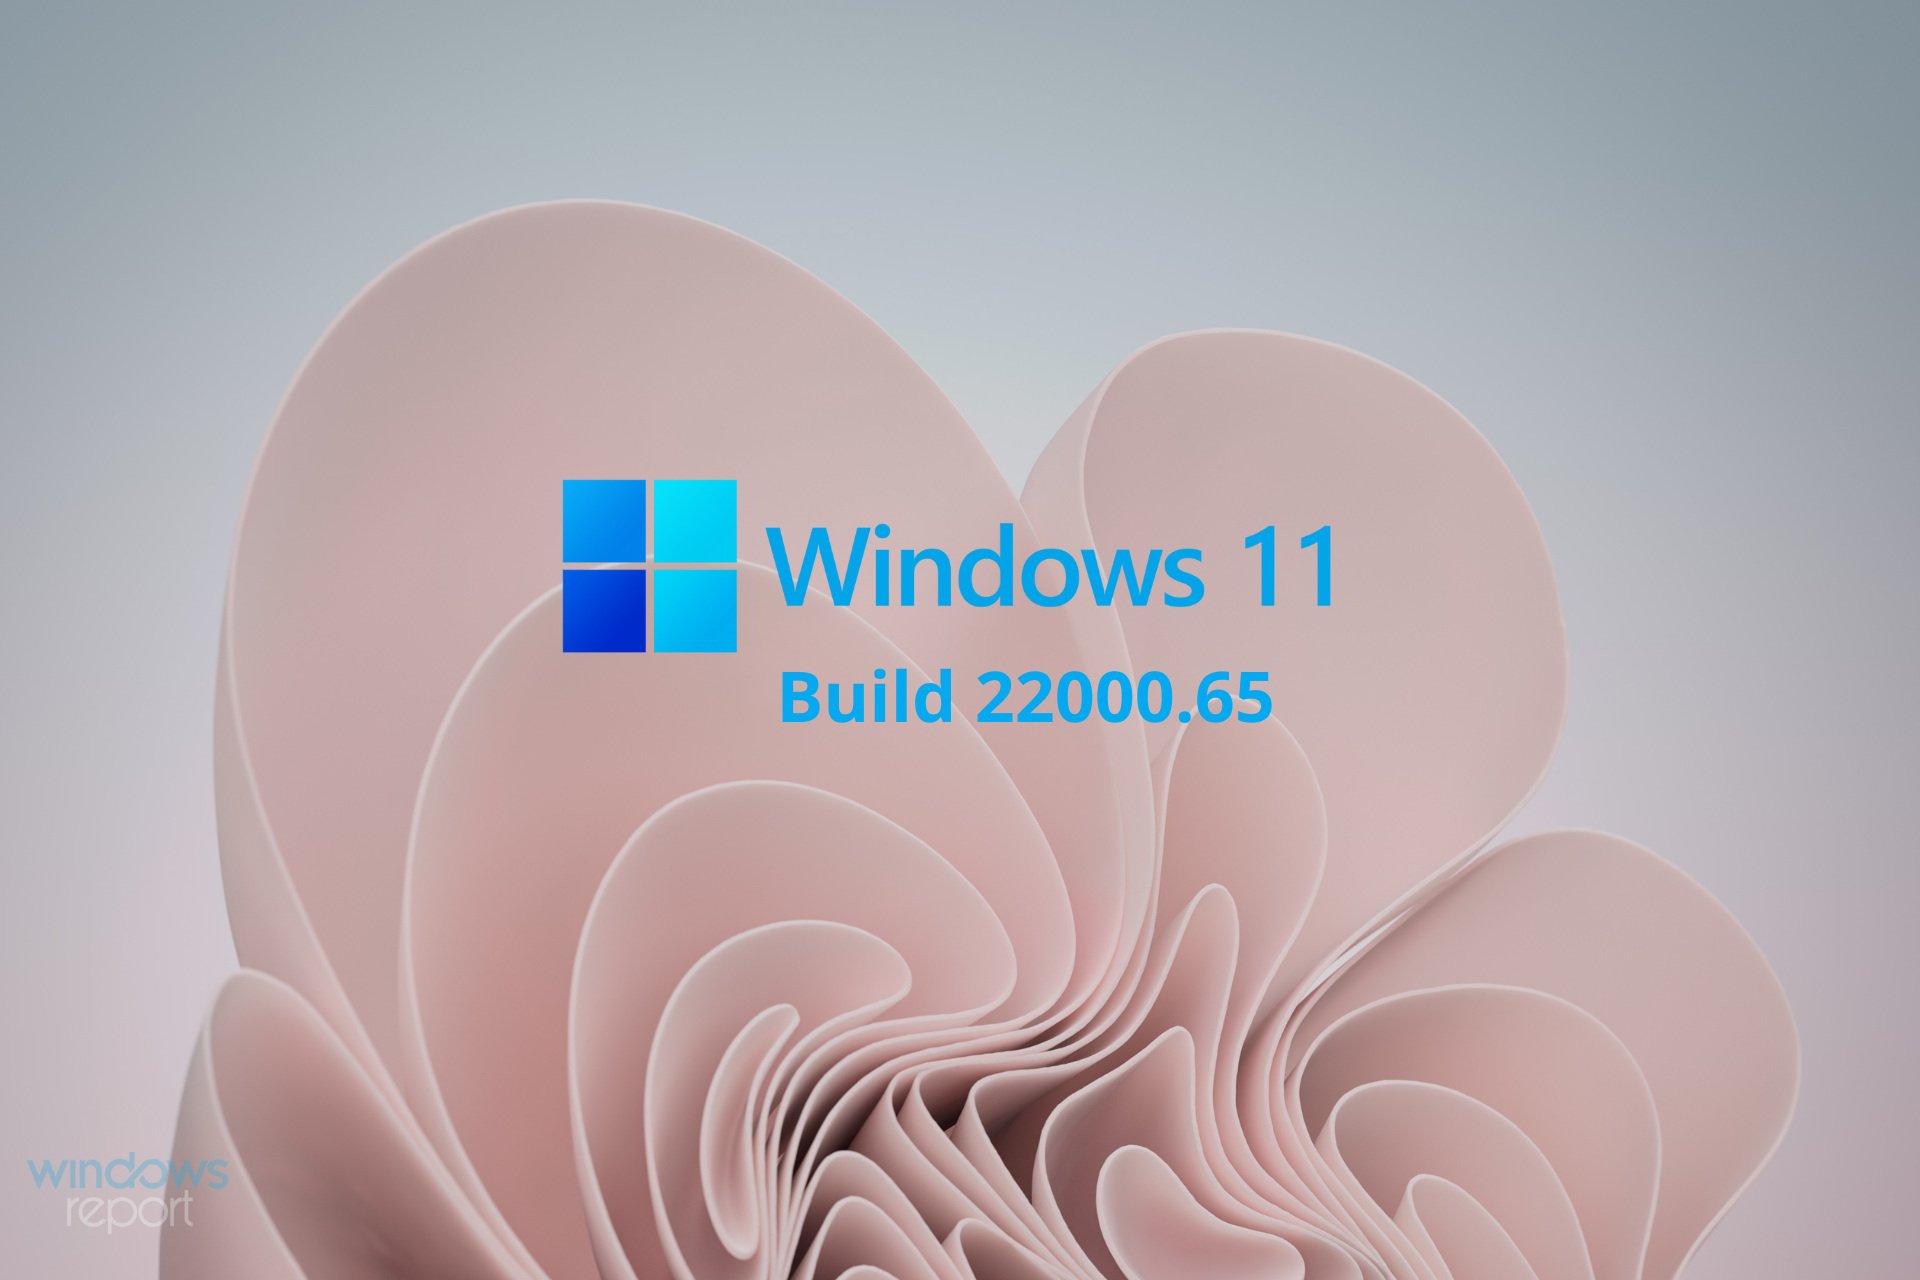 Windows 11 Build 22000.65 review